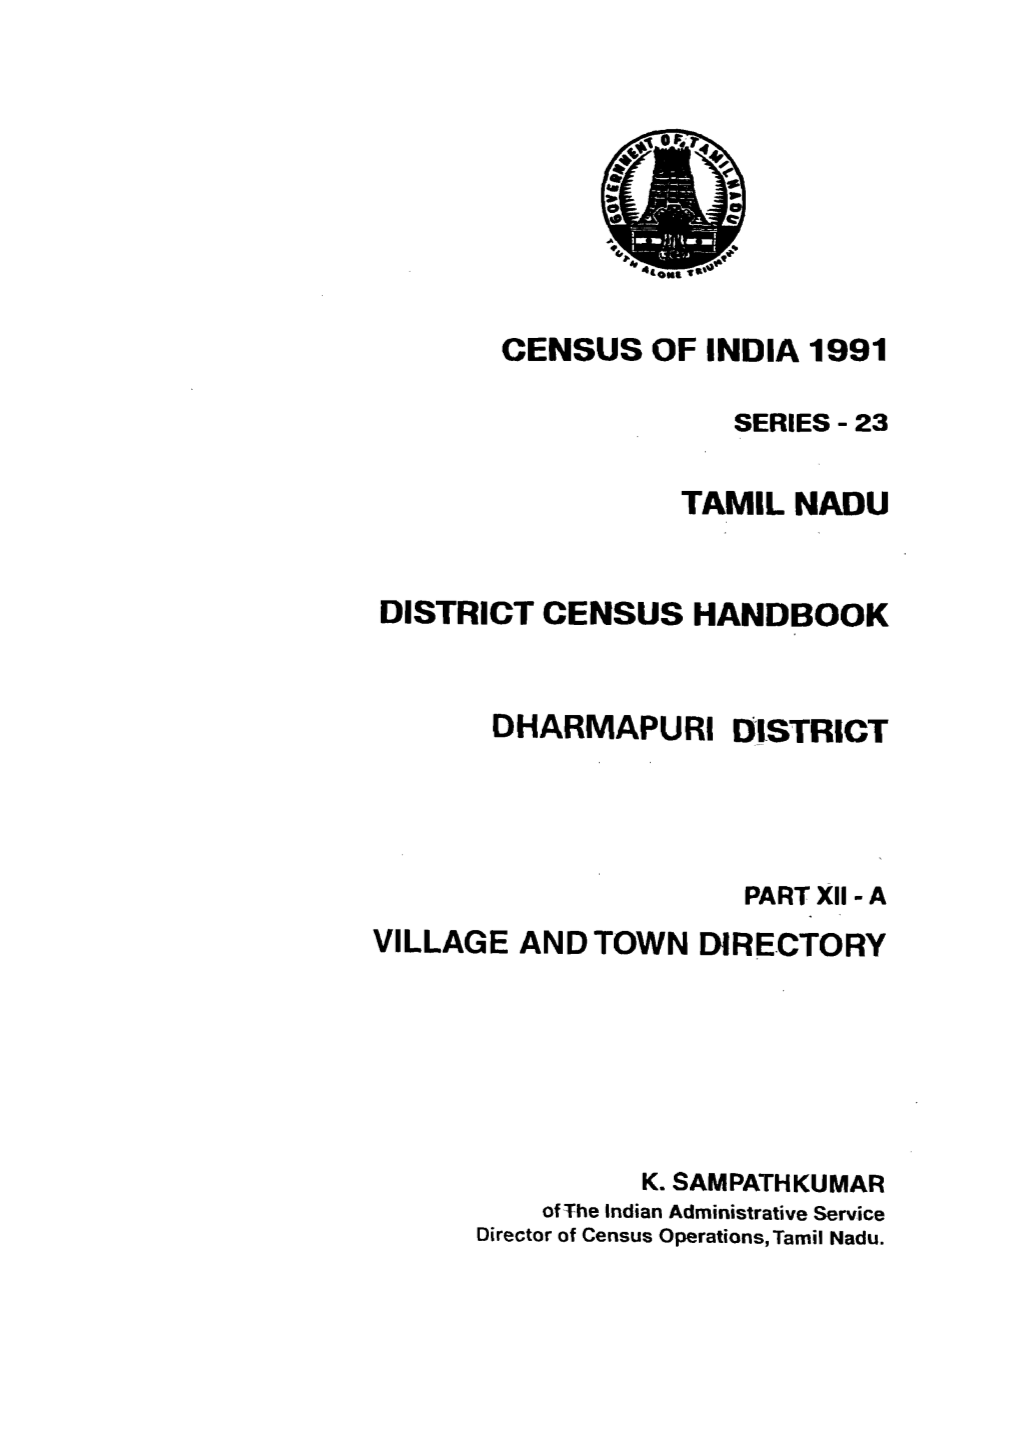 District Census Handbook, Dharmapuri, Part XII-A, Series-23